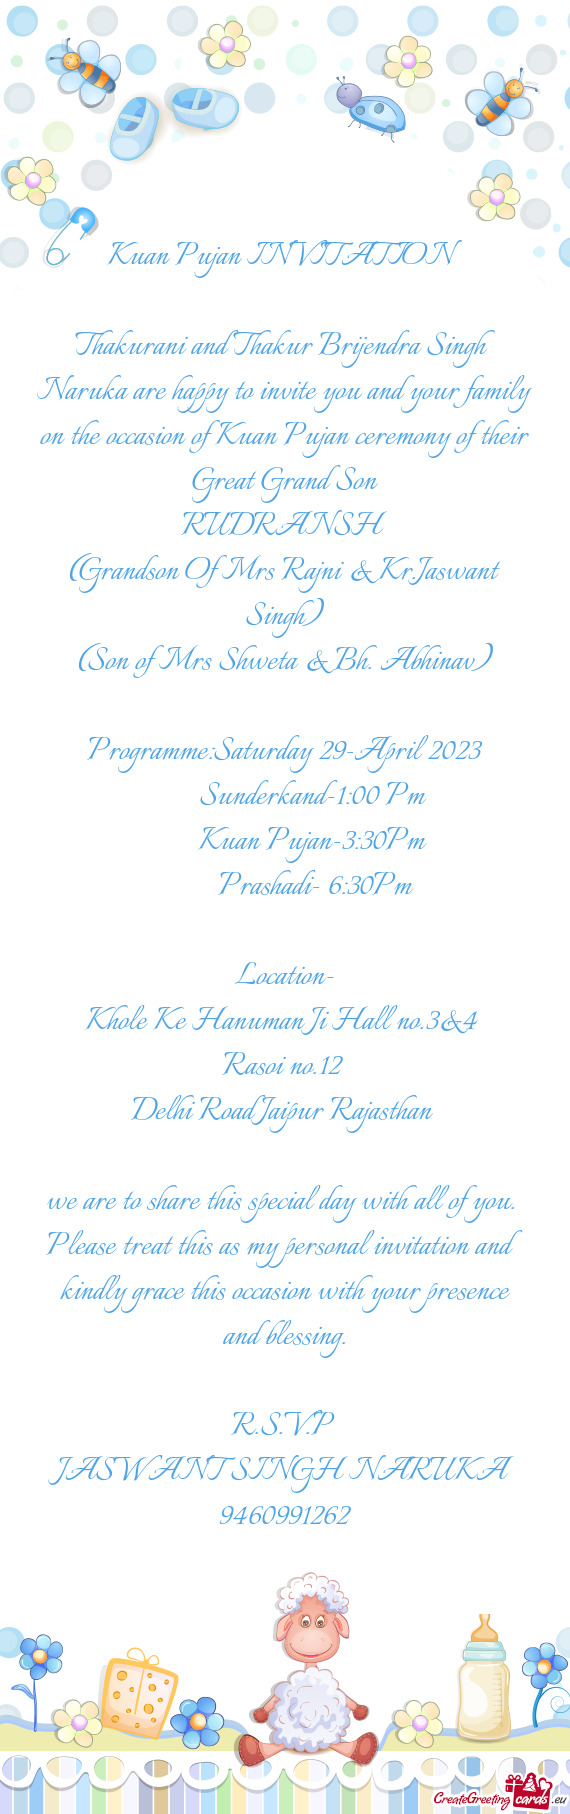 Programme:Saturday 29-April 2023